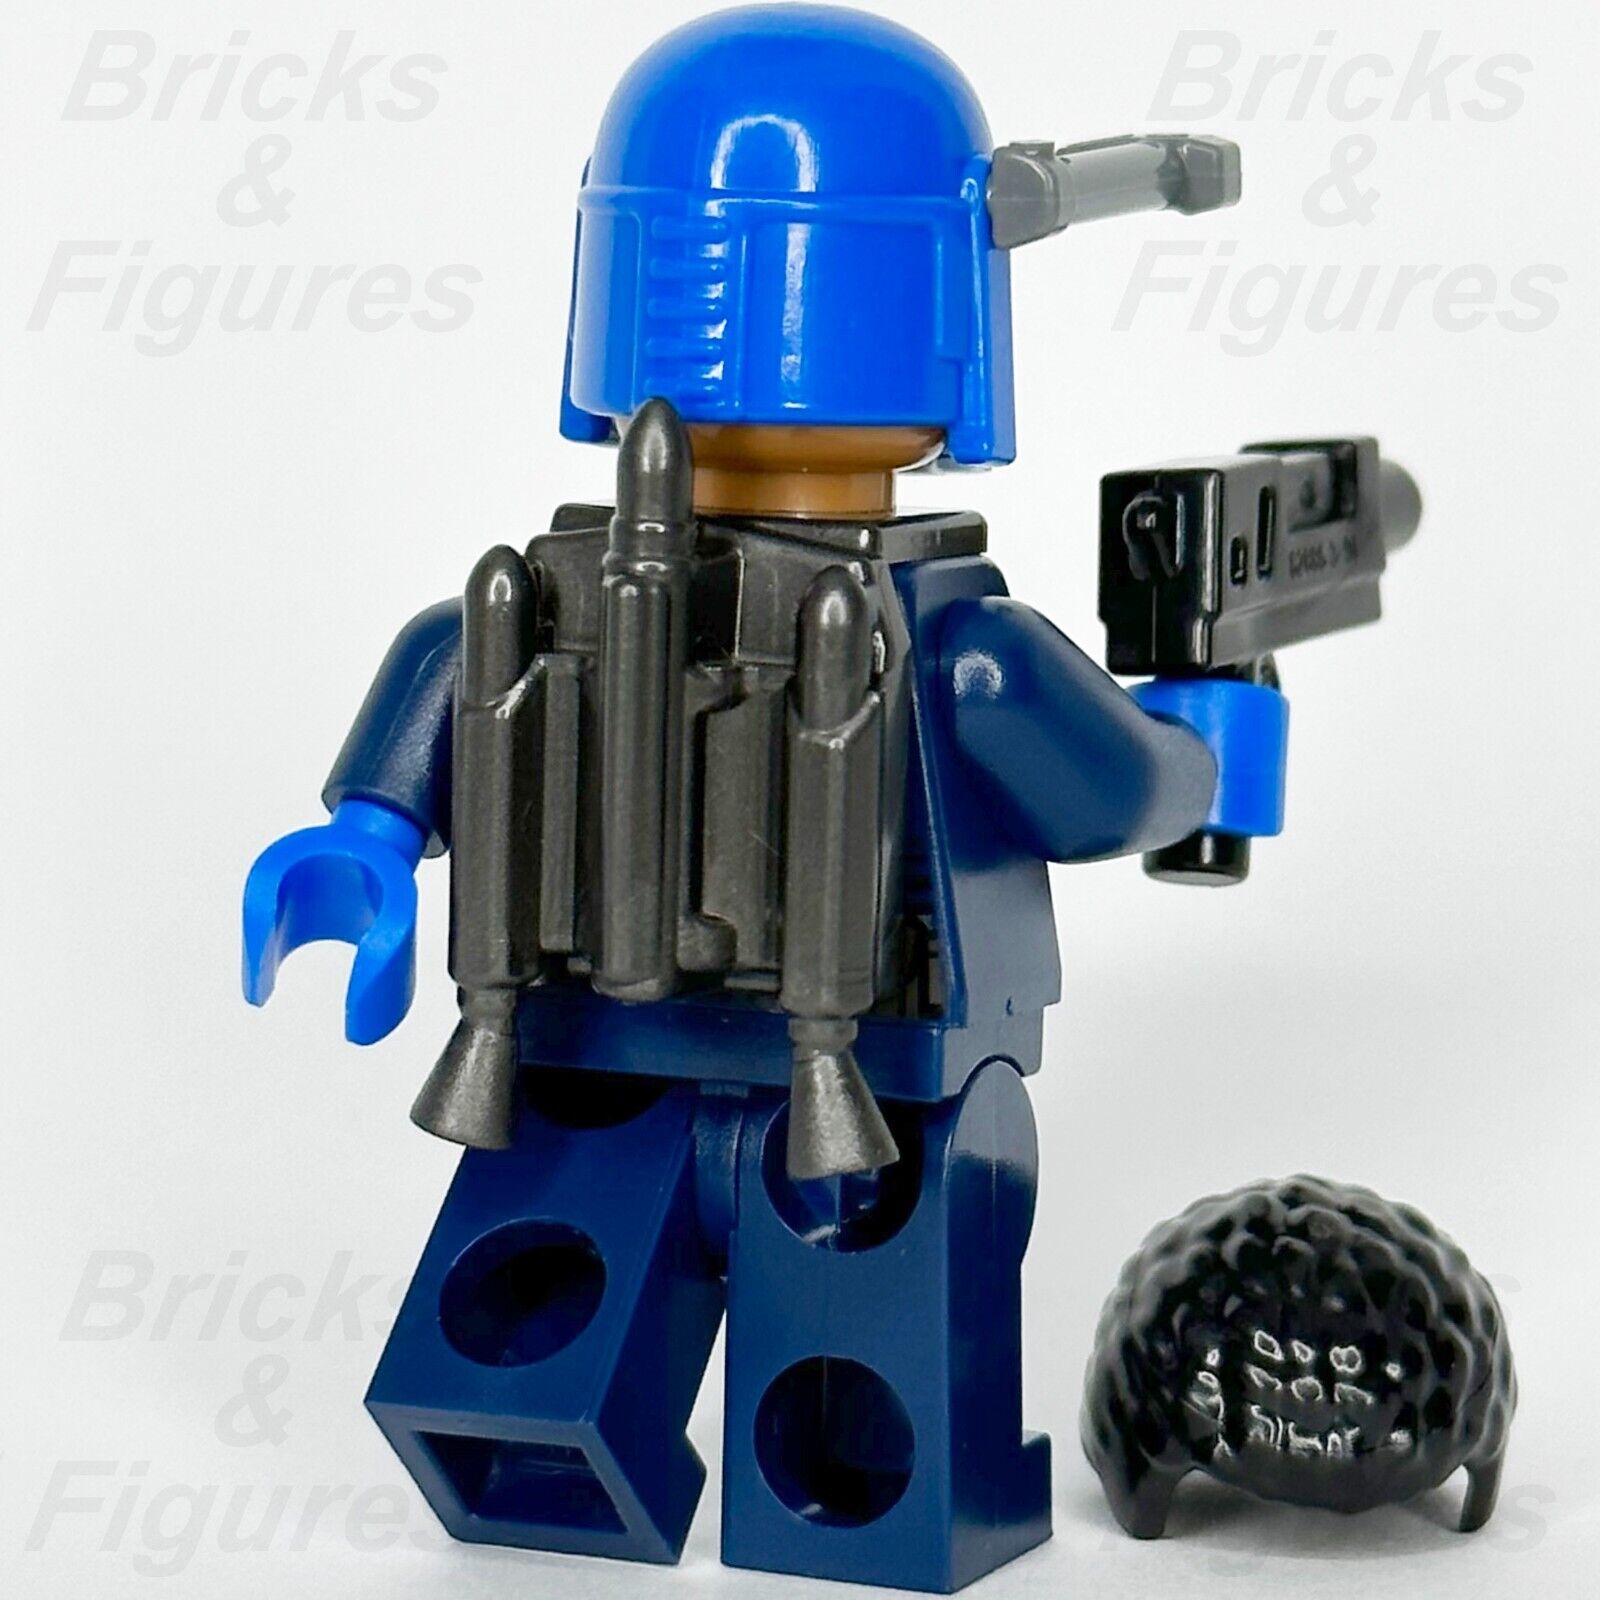 LEGO Star Wars Mandalorian Fleet Commander Minifigure with Helmet 75348 sw1259 4